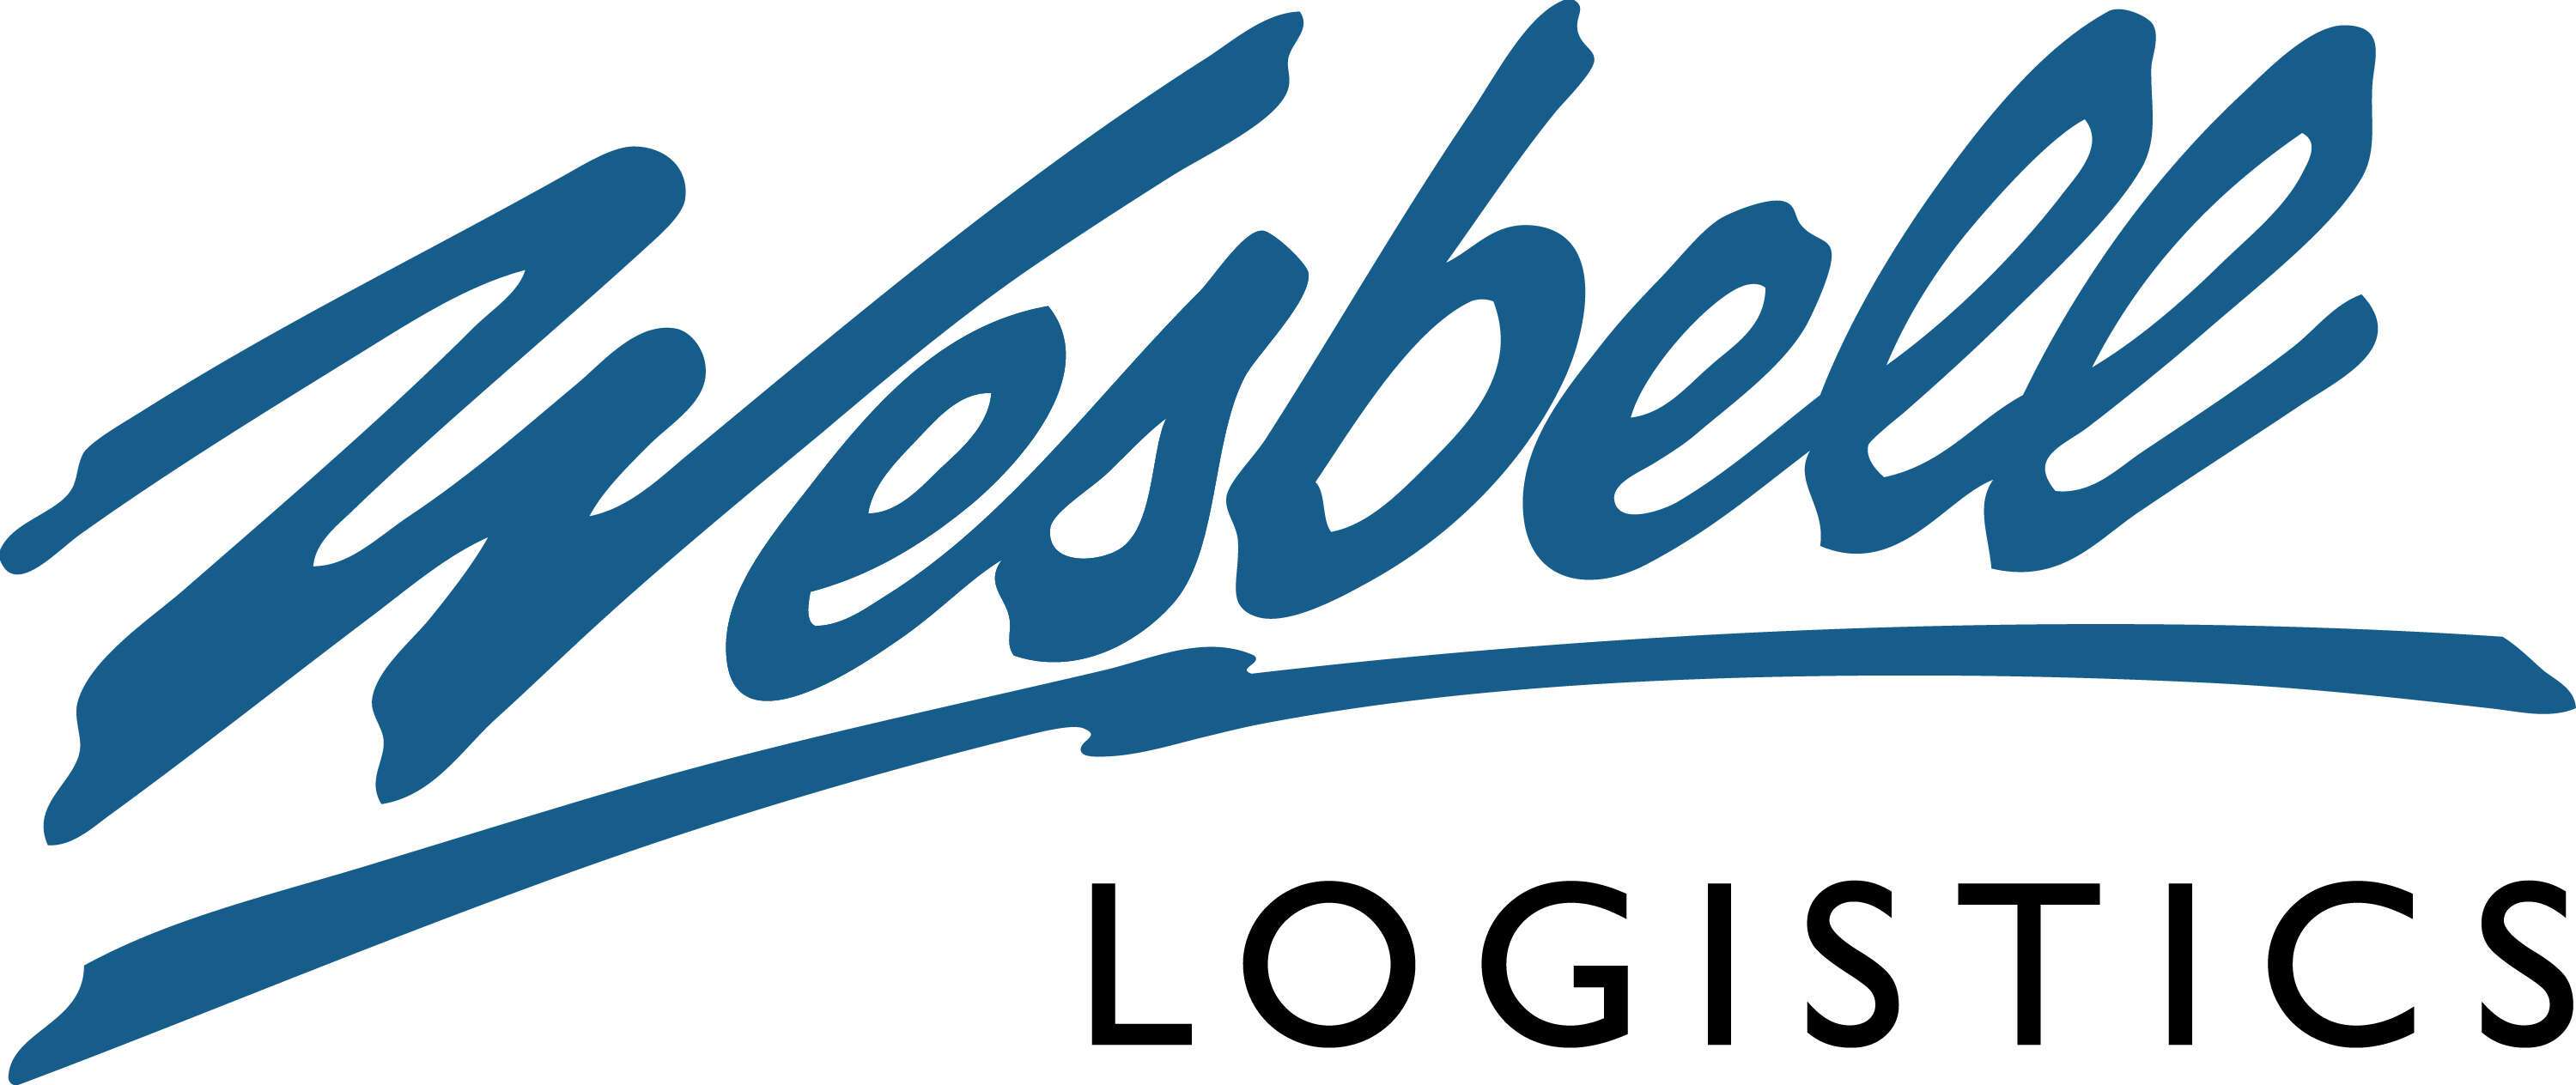 Wesbell Logistics